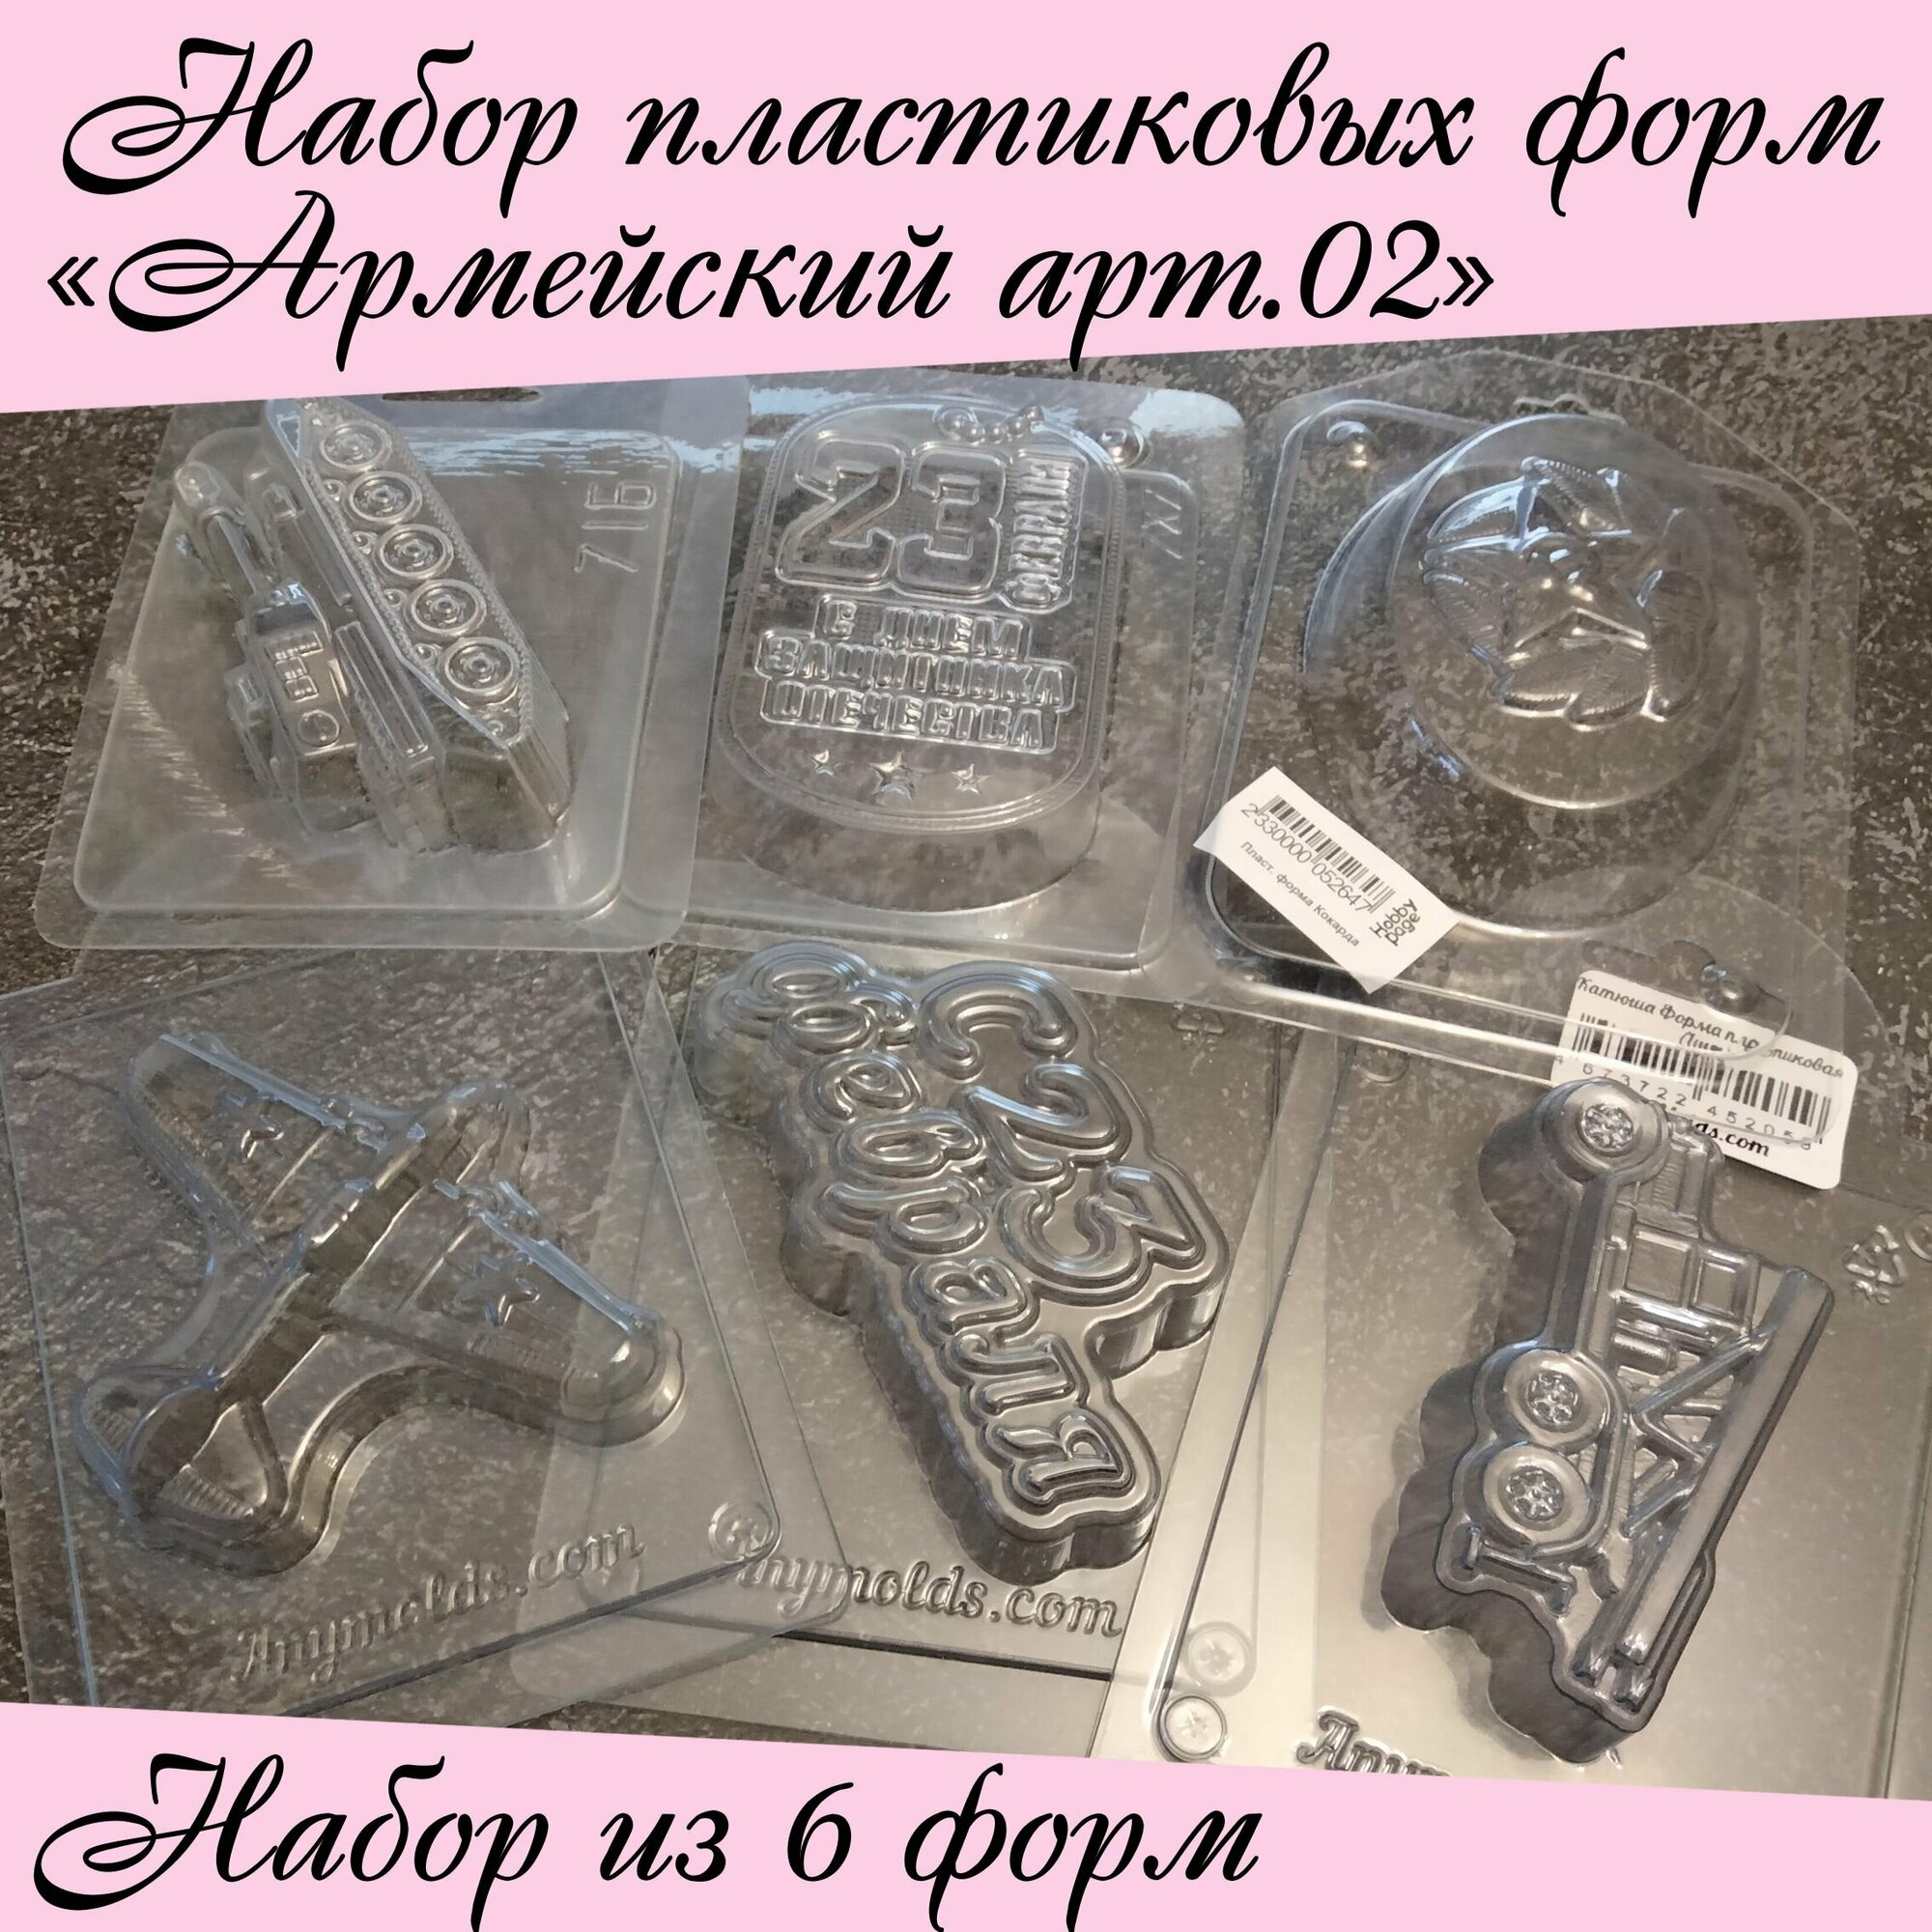 Набор пластиковых форм "Армейский арт.02"